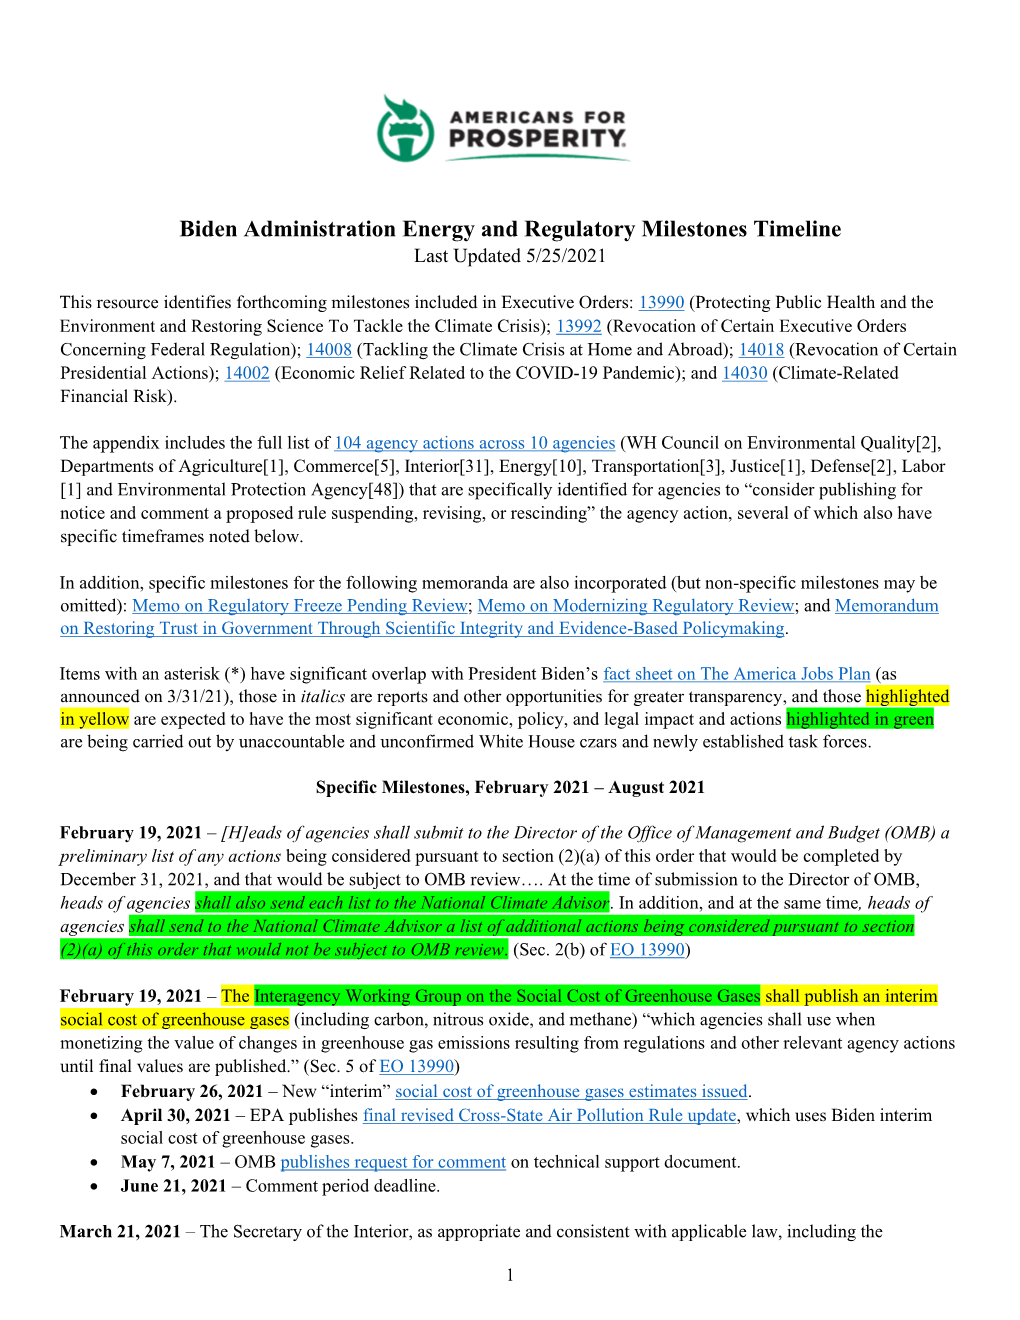 Biden Administration Energy and Regulatory Milestones Timeline Last Updated 5/25/2021